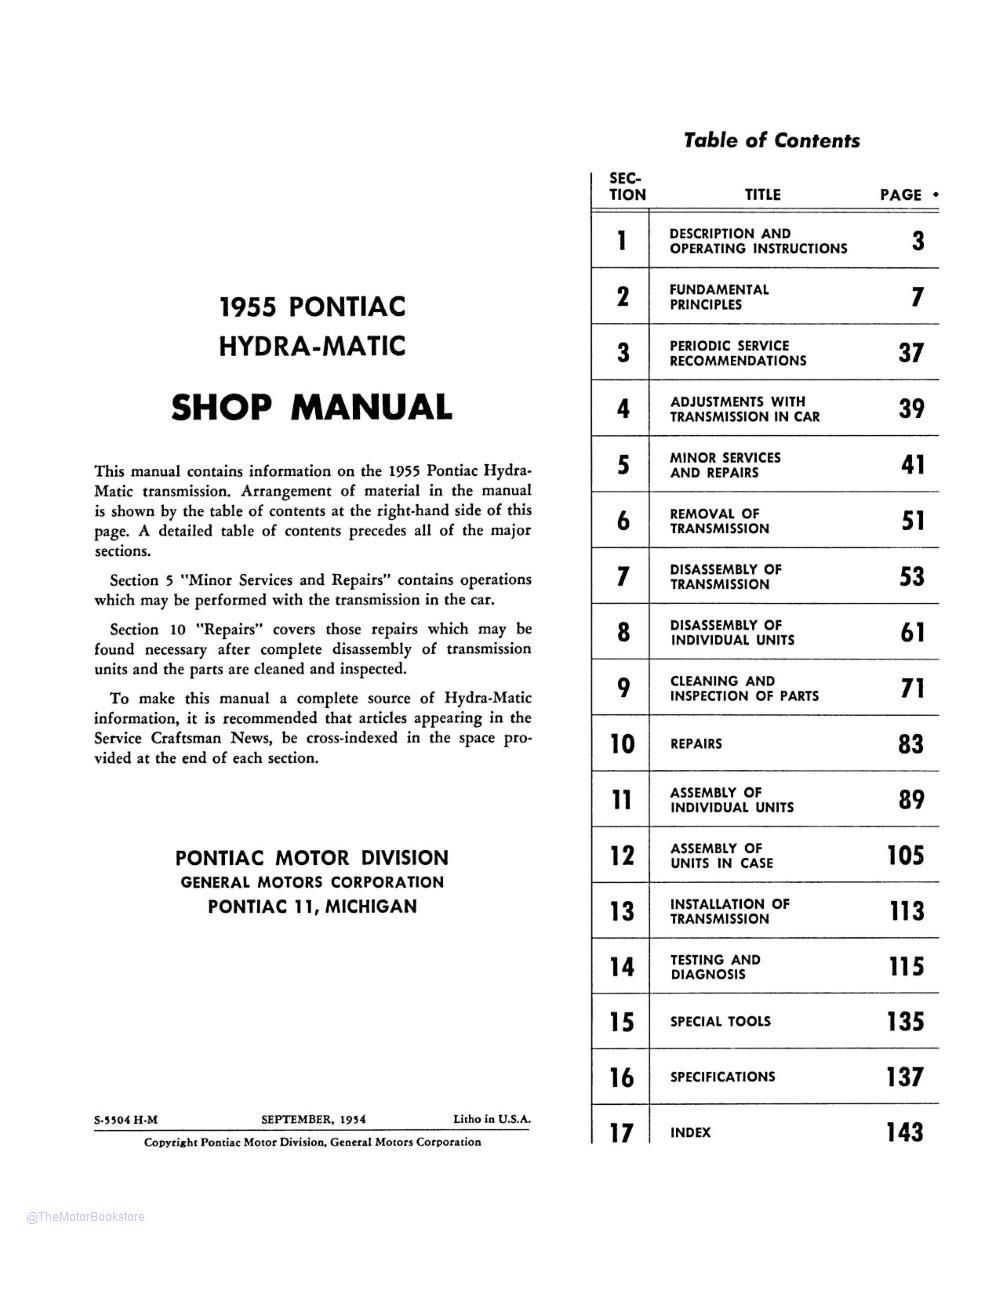 1955 Pontiac Hydra-Matic Drive Shop Manual  - Table of Contents